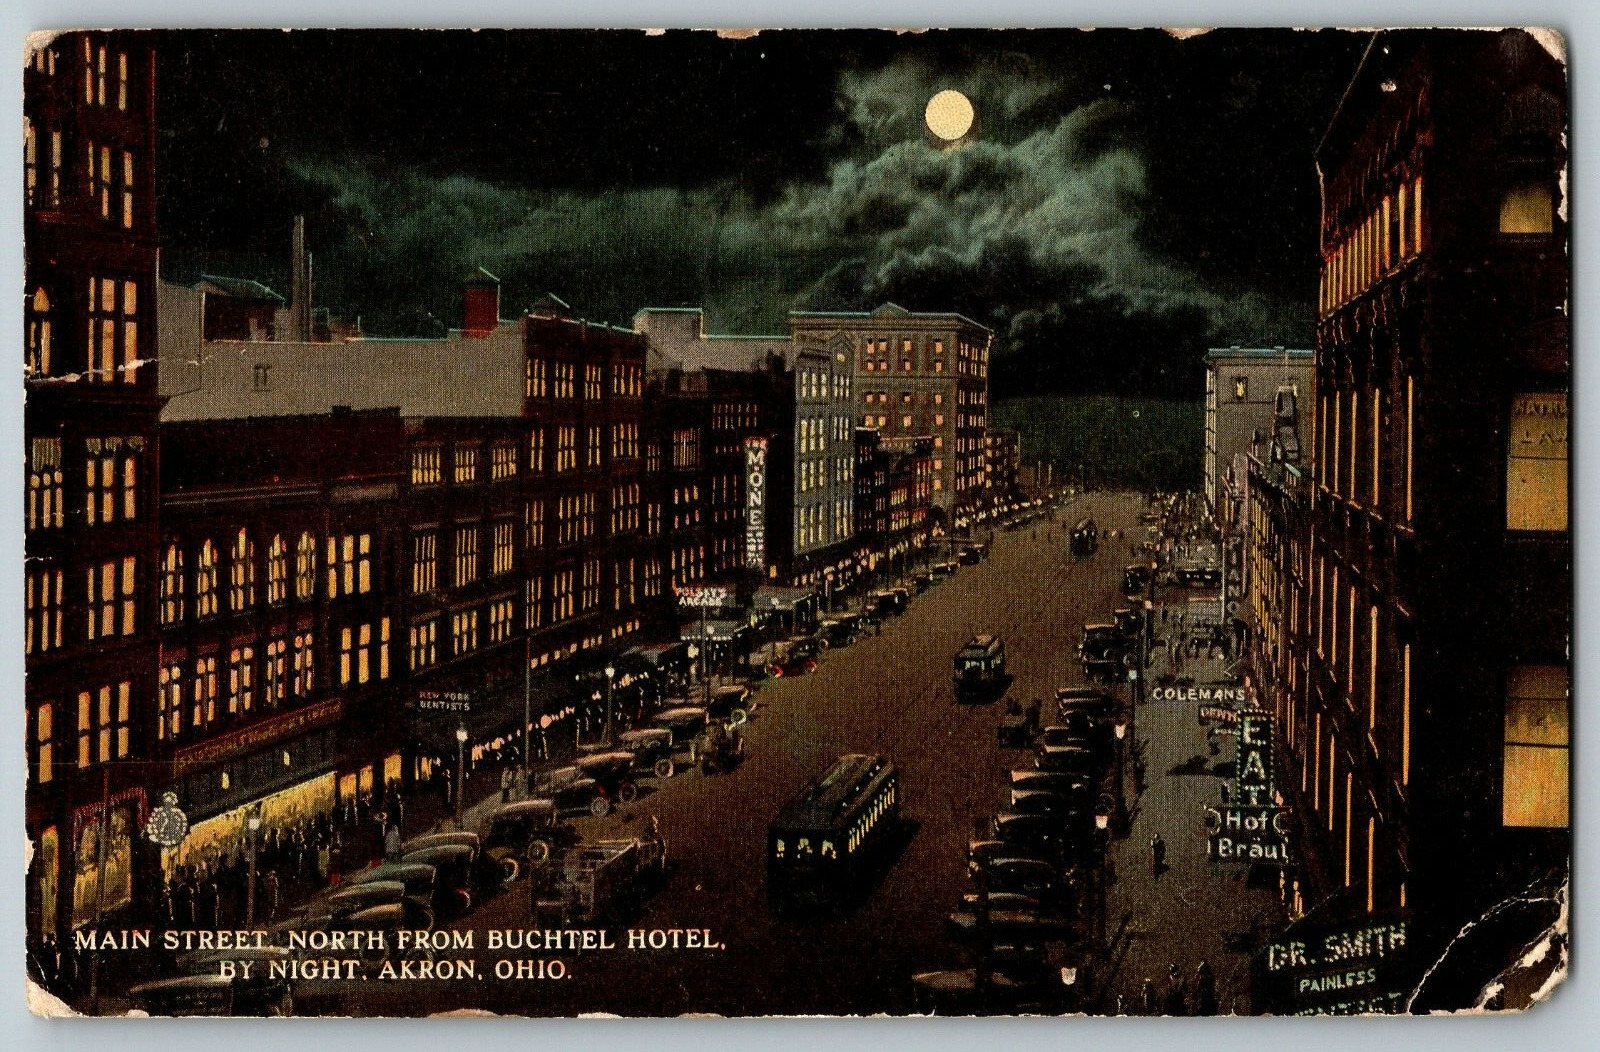 Akron, Ohio - Main Street North from Buchtel Hotel by Night - Vintage Postcard